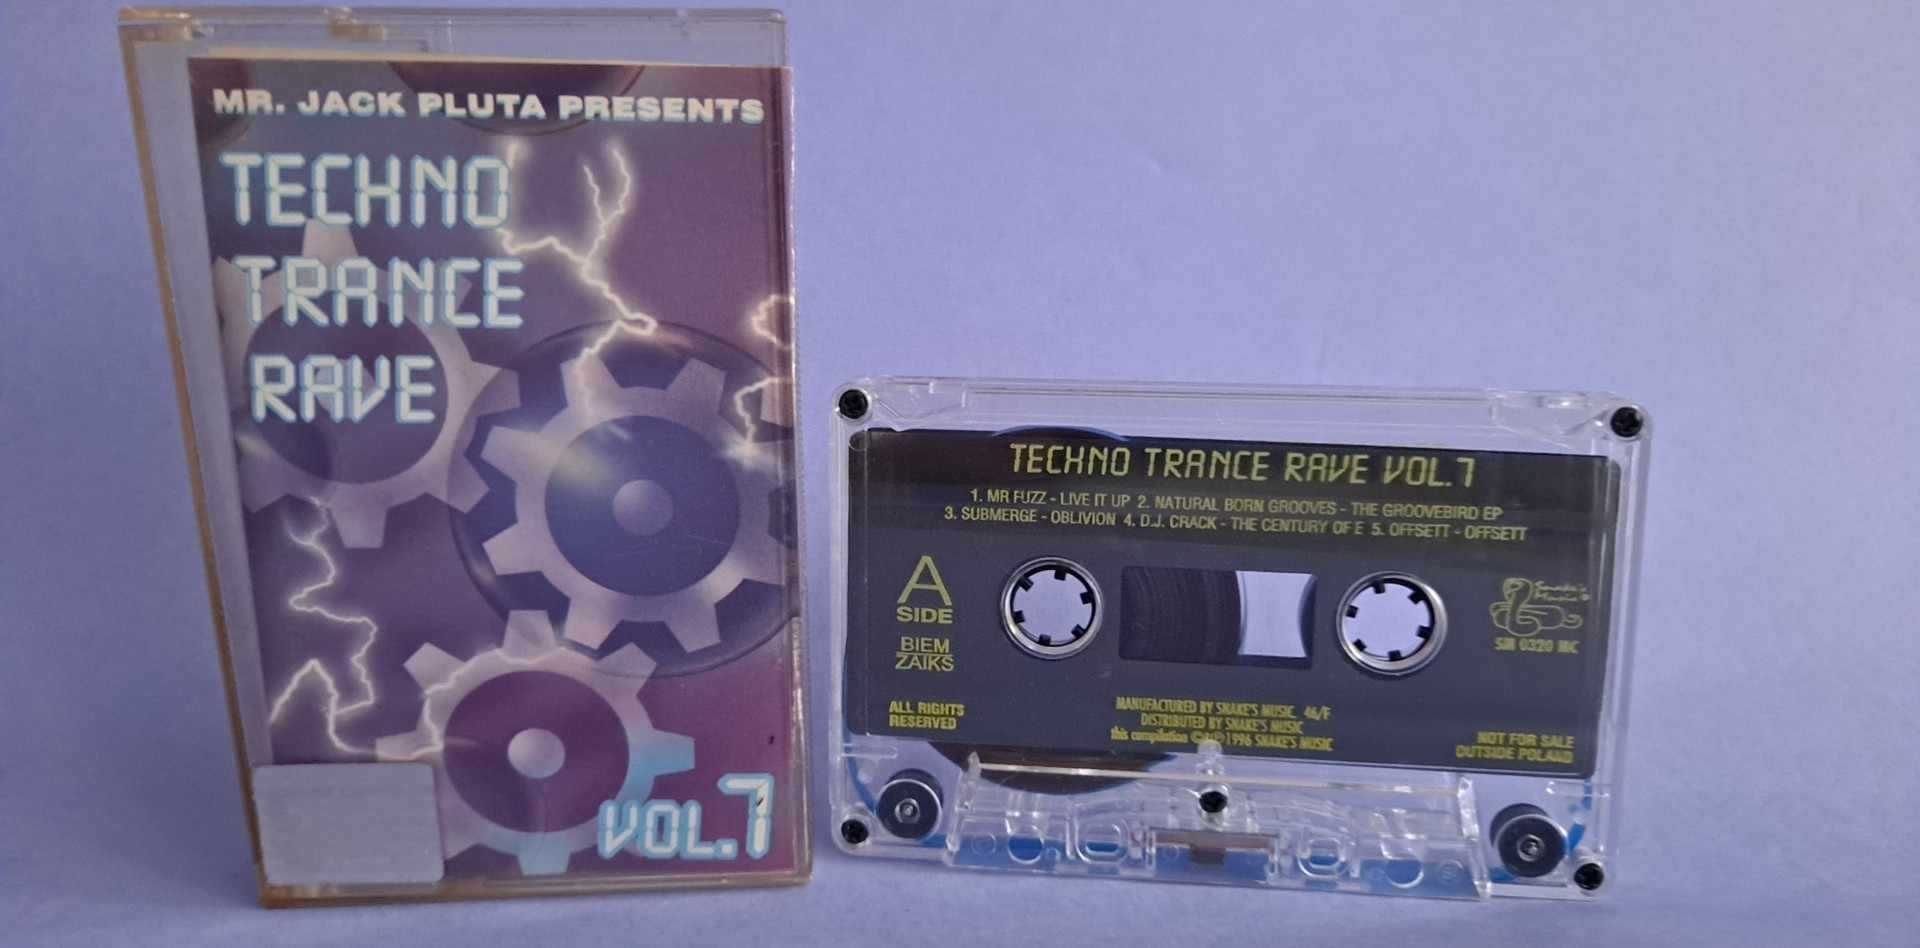 Techno Trance Rave Vol. 7 SNAKE'S MUSIC kaseta 1996 Poland